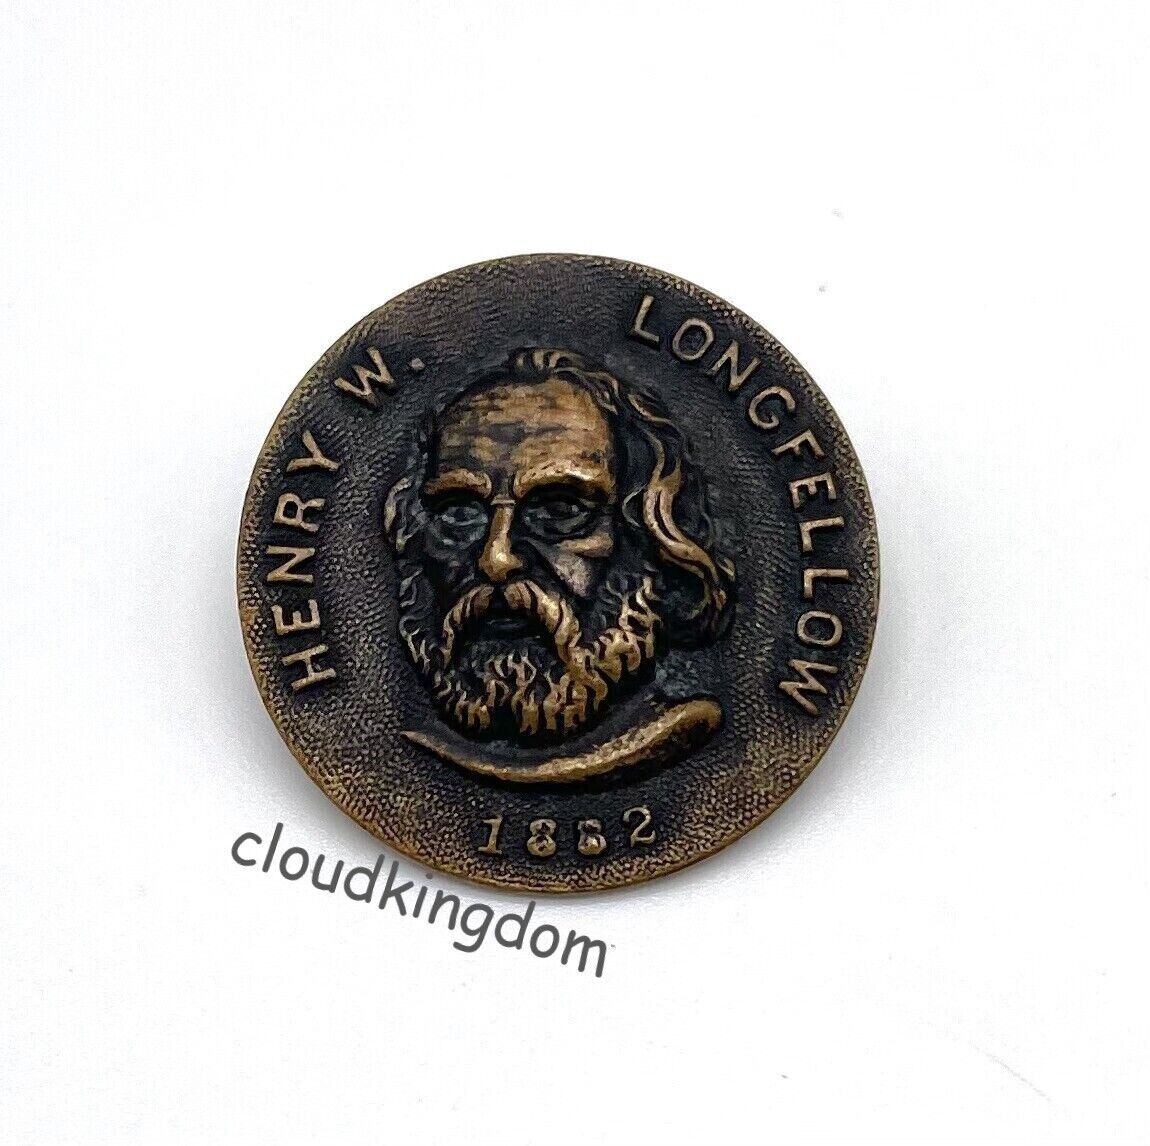 Henry Wadsworth Longfellow 1882 Brass Memoriam Funeral Badge Button